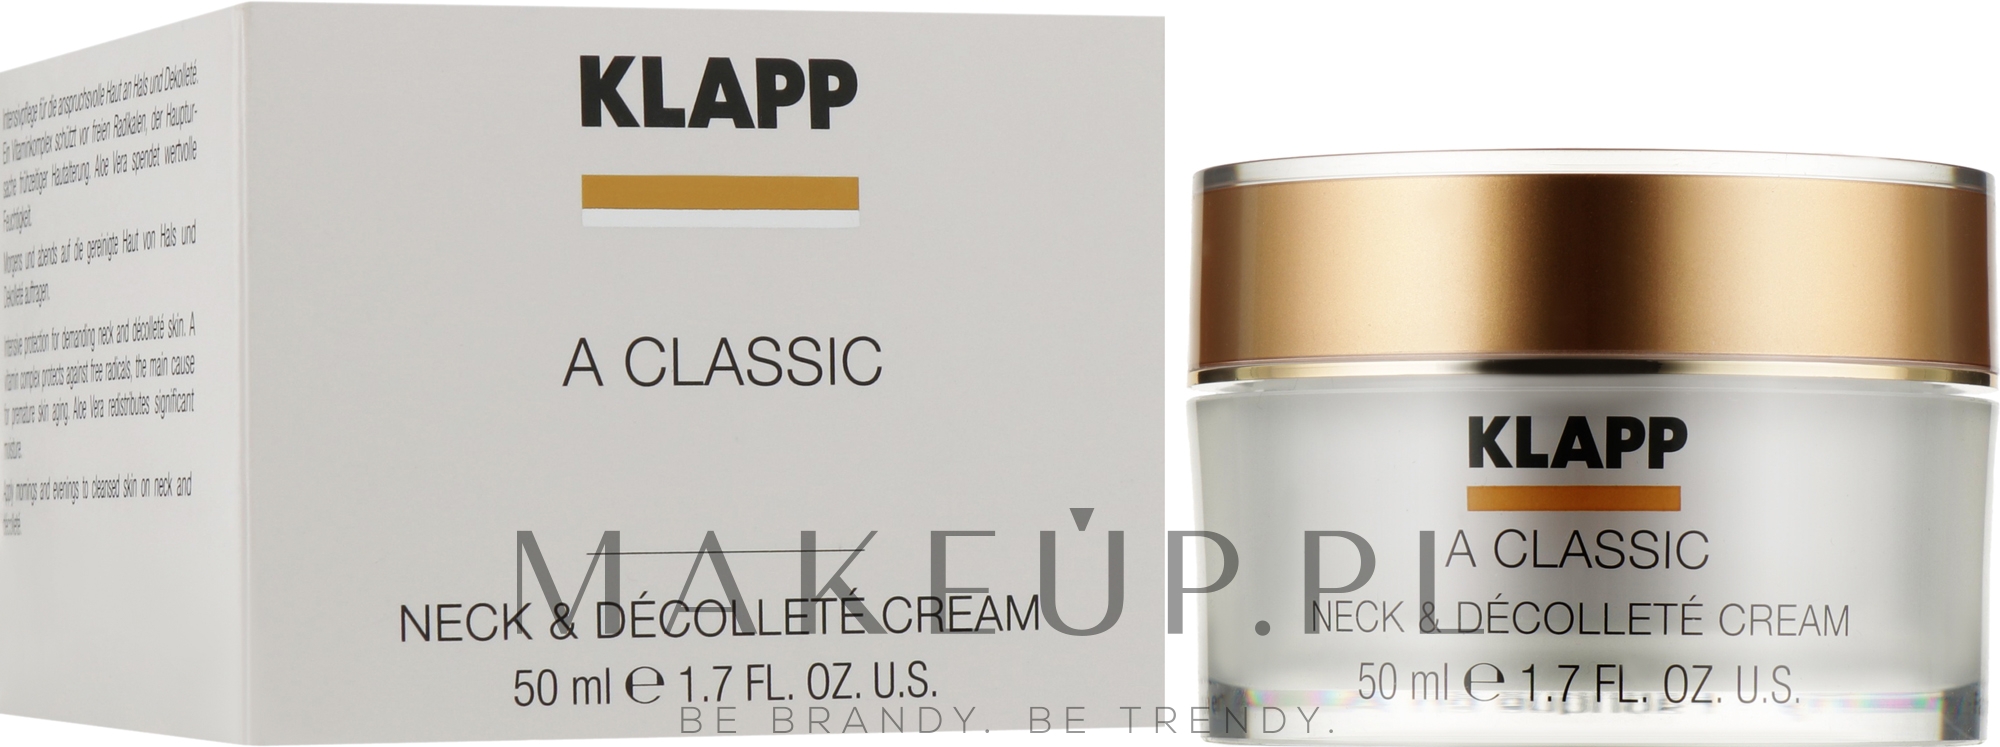 Krem na szyję i dekolt - Klapp A Classic Neck & Decollete Cream — Zdjęcie 50 ml